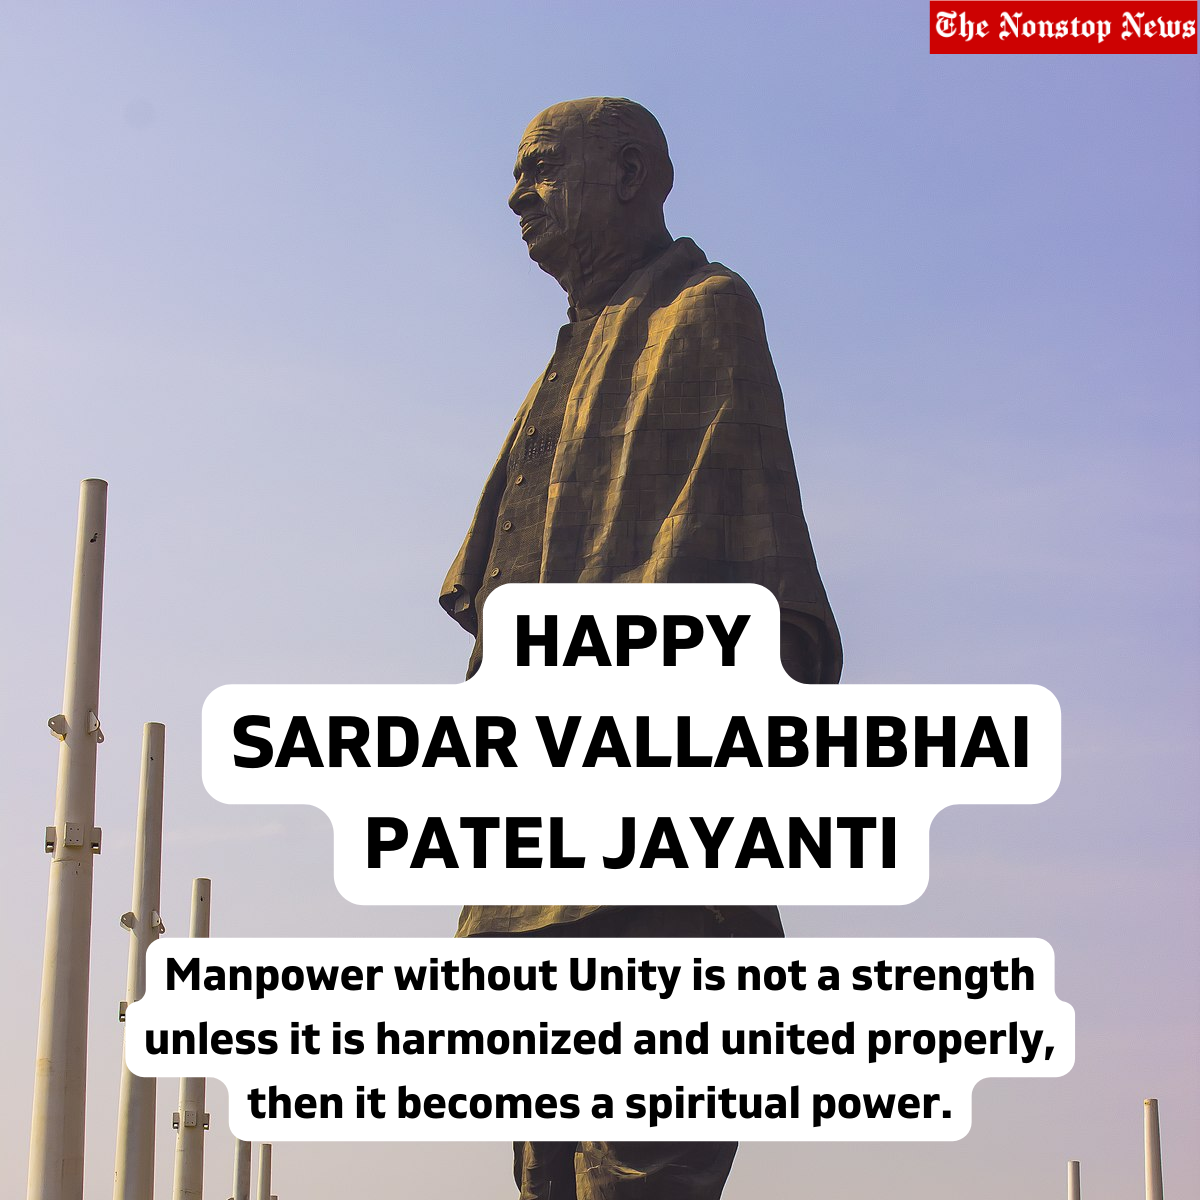 Happy Sardar Vallabhbhai Patel Jayanti Wishes and Messages 2022: Rashtriya Ekta Diwas HD Images, Greetings, Quotes, Posters, and Shayari